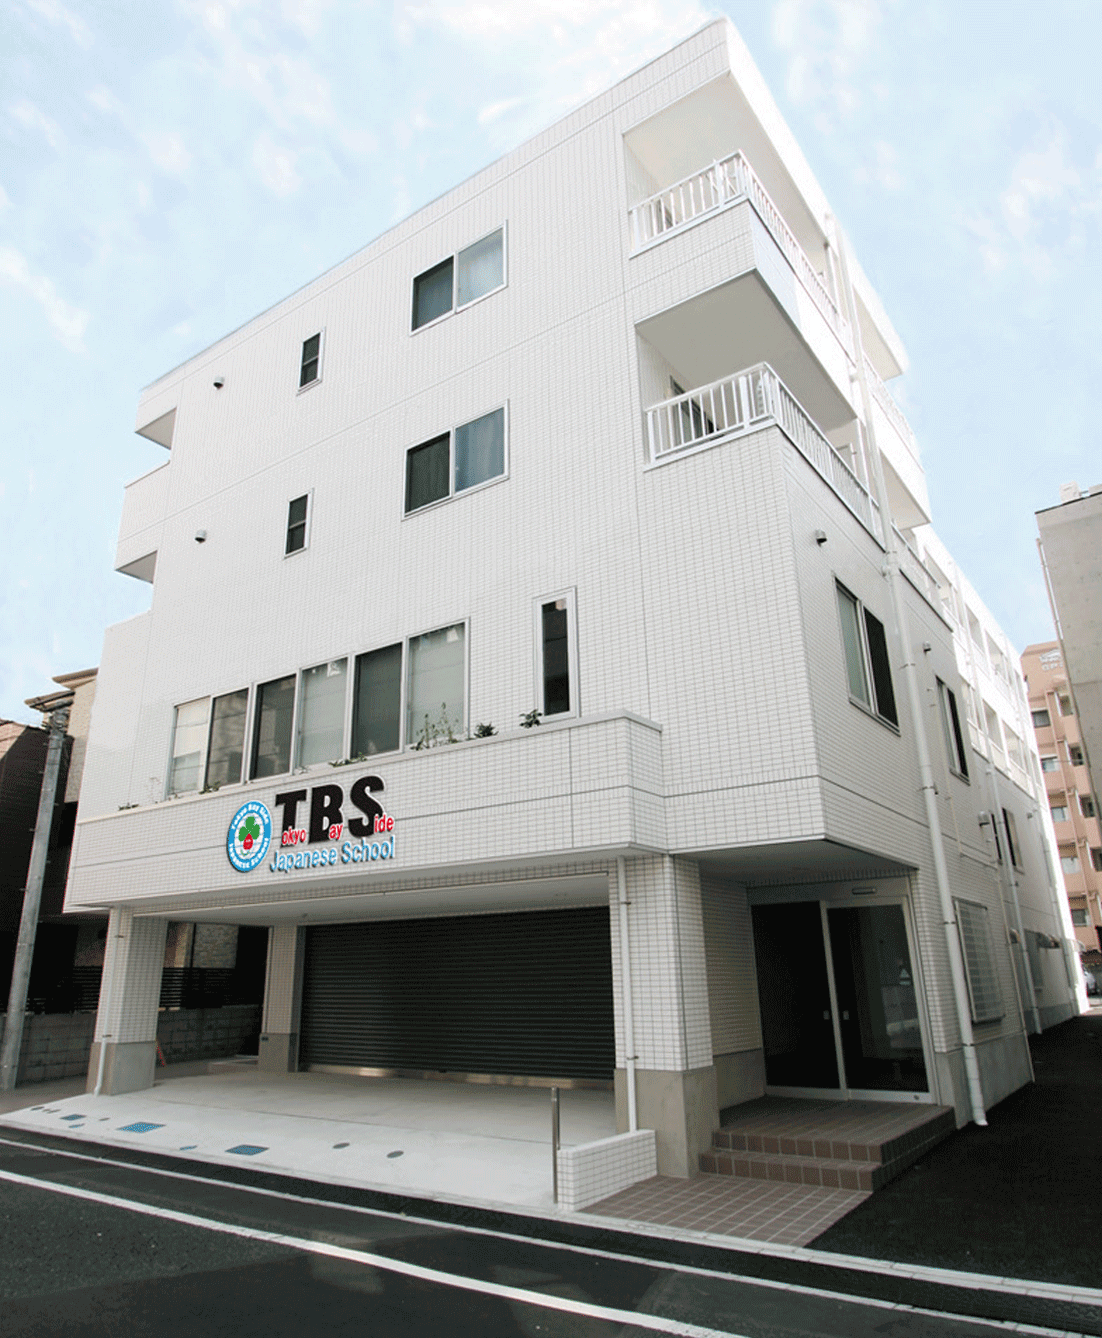 Tokyobayside Japanese Language School